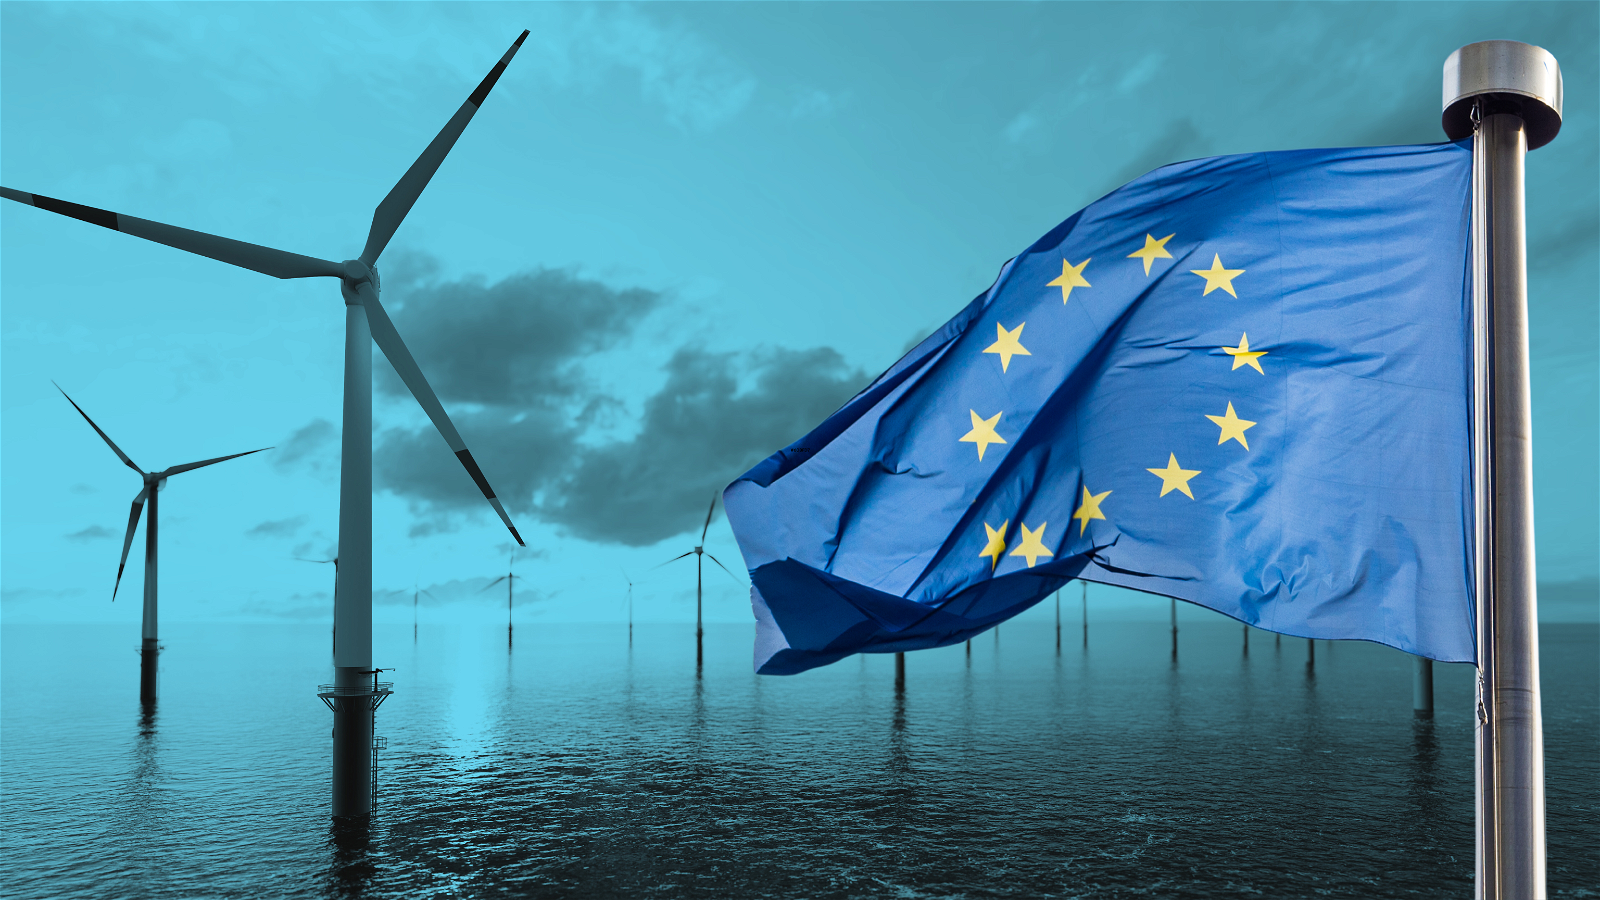 Europe's 2030 renewable energy target: a wind power challenge